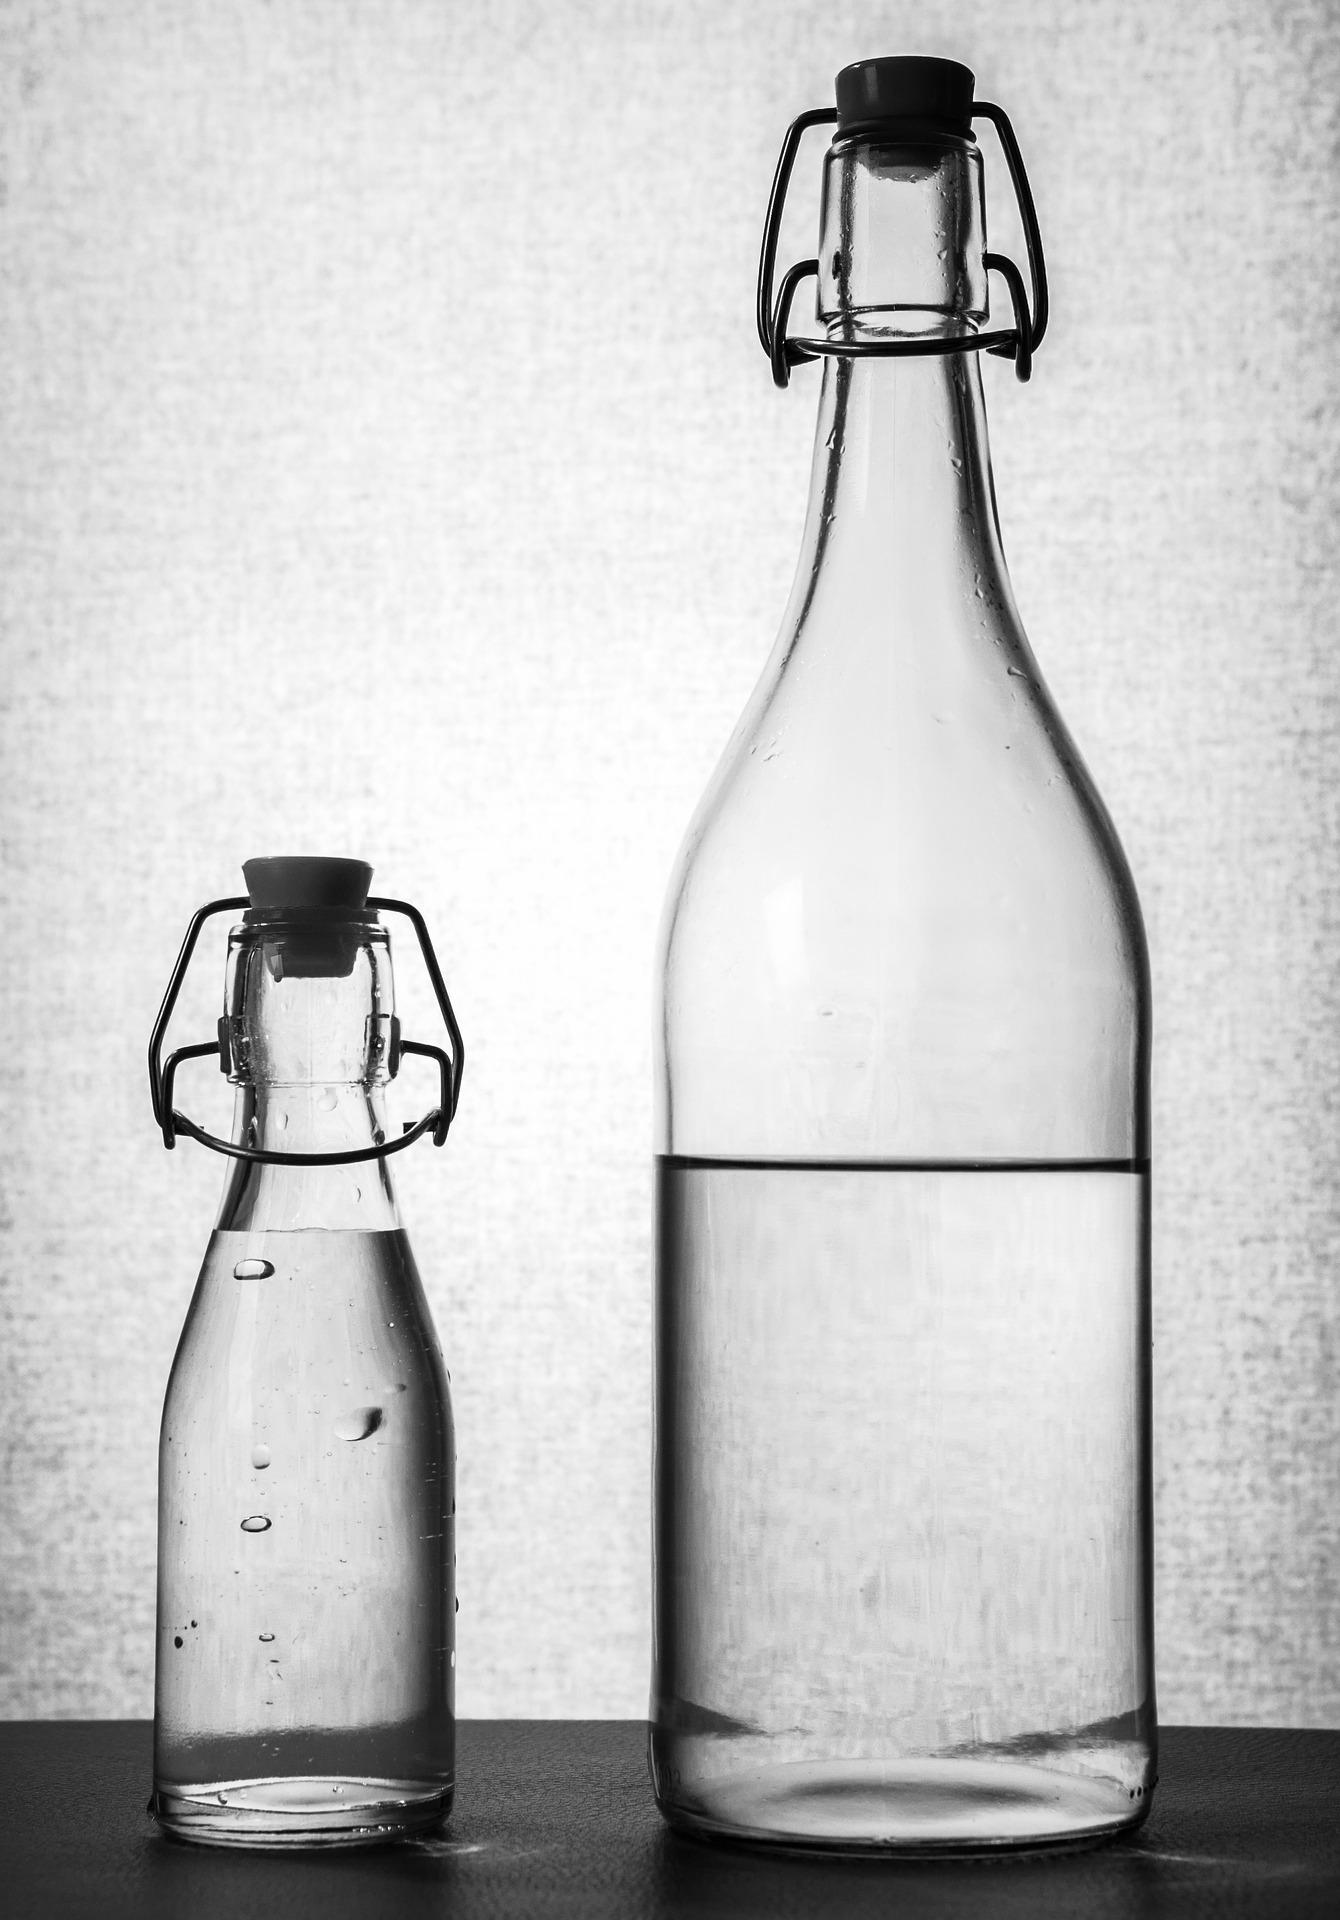 Cómo lavar tu botella de cristal reutilizable paso a paso